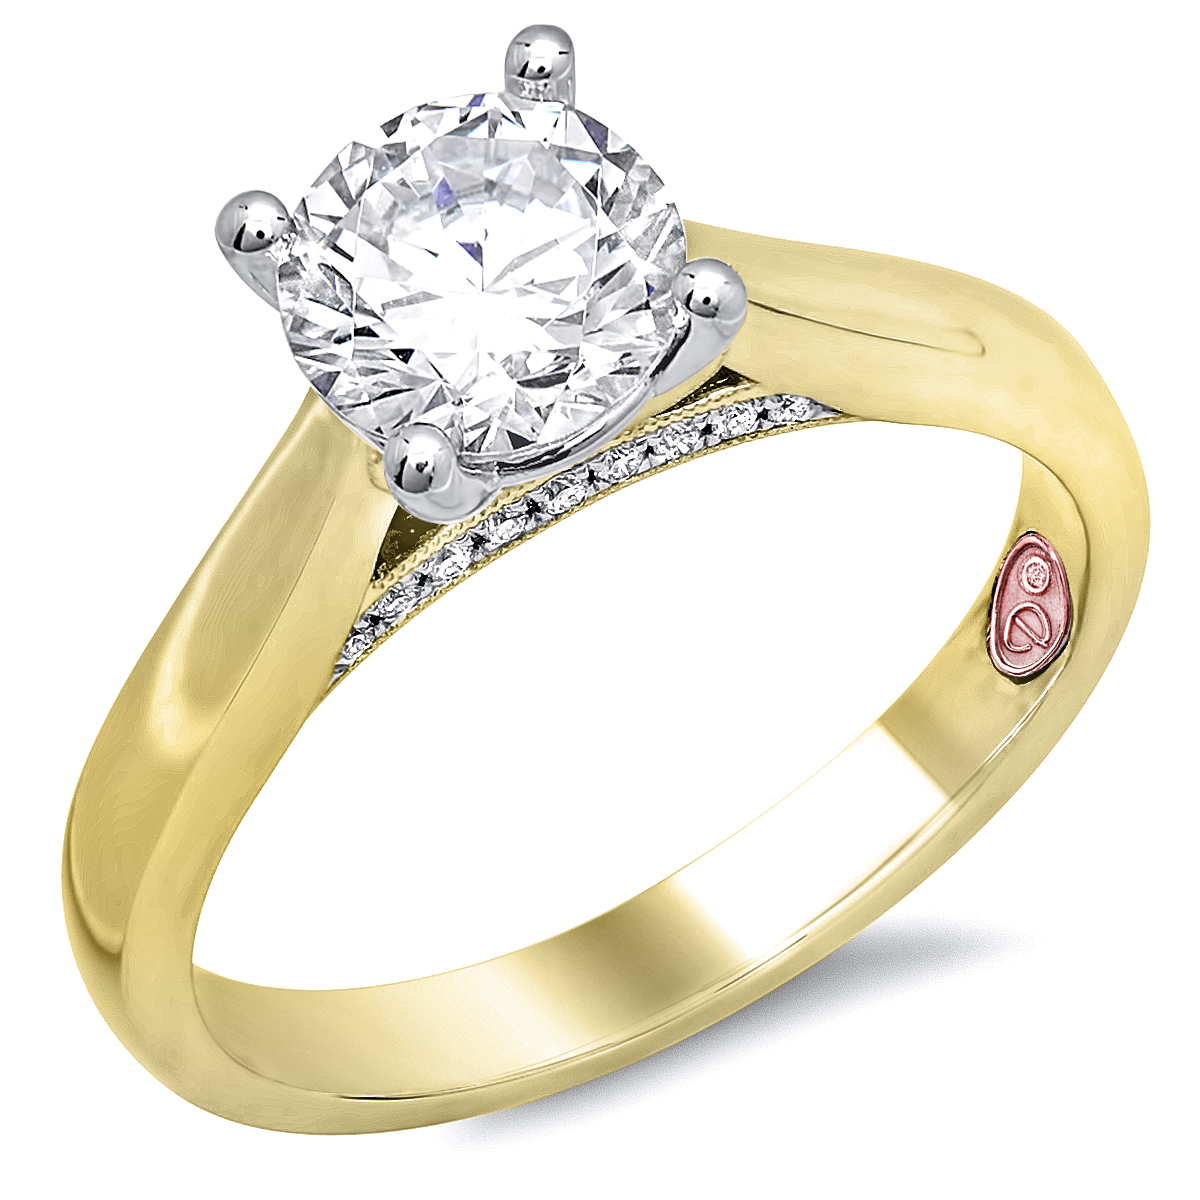 Designer Engagement Ring - DW6879